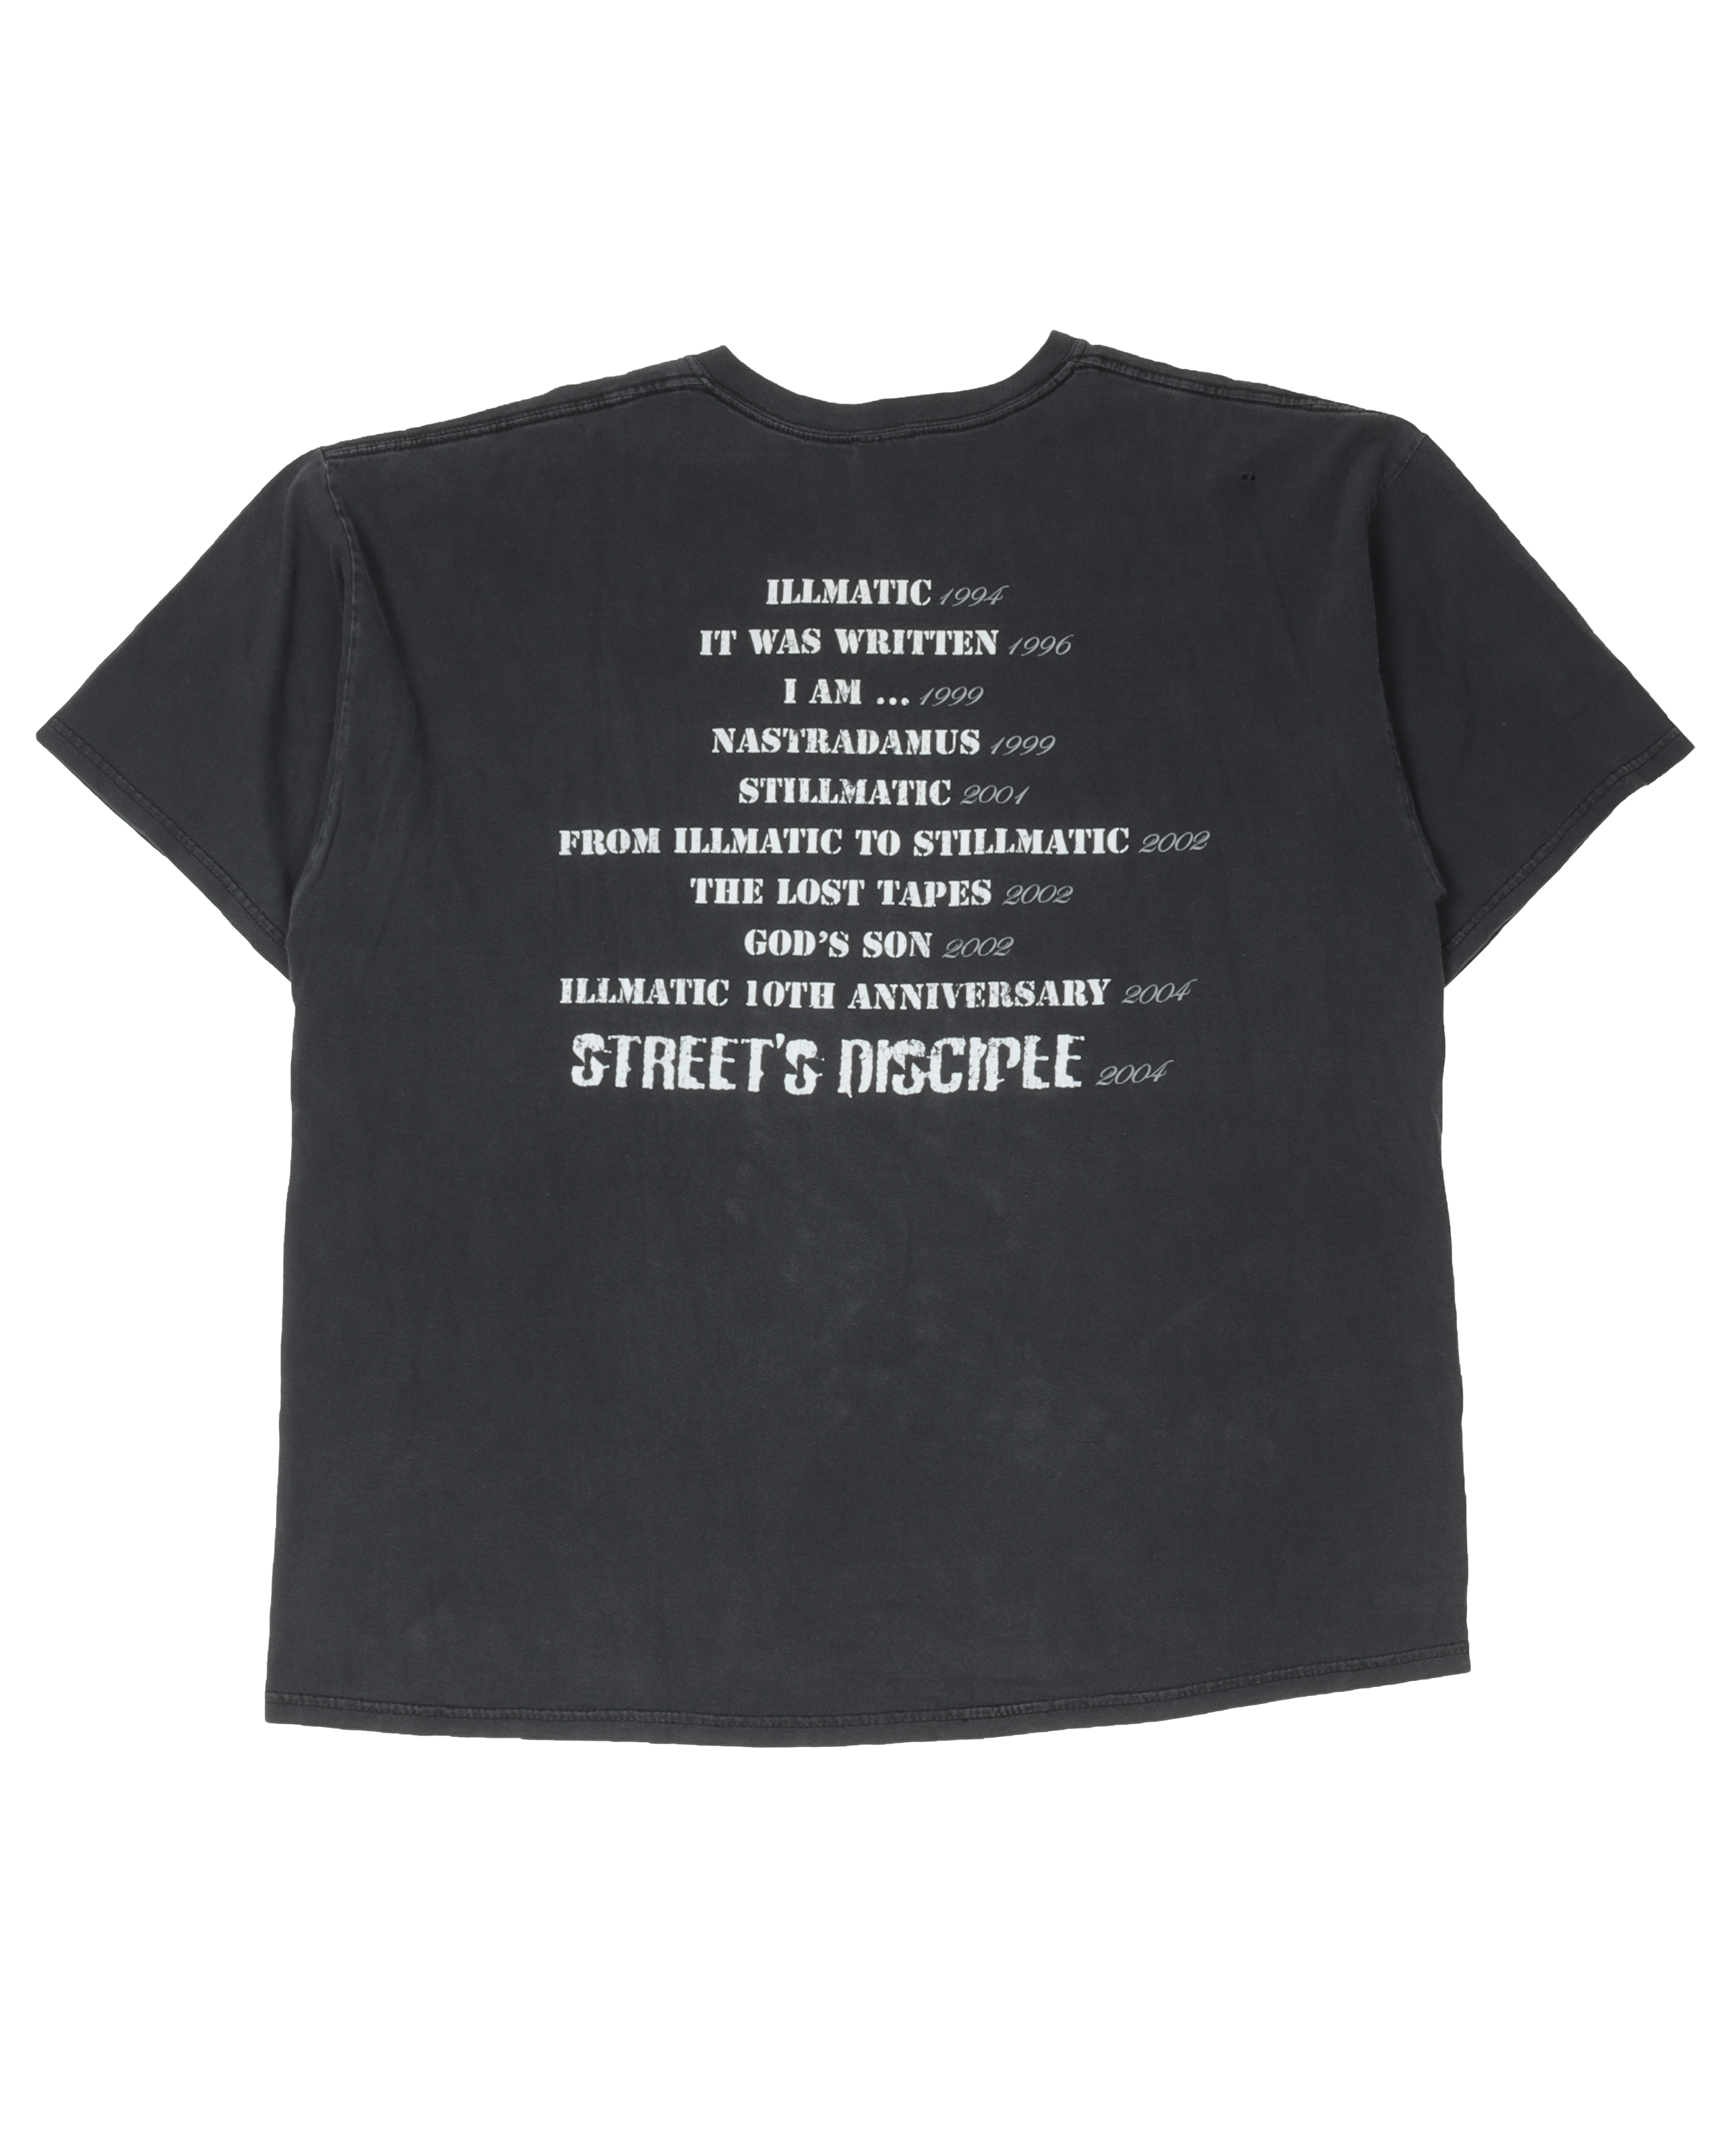 Nas 10 Year Strong T-Shirt